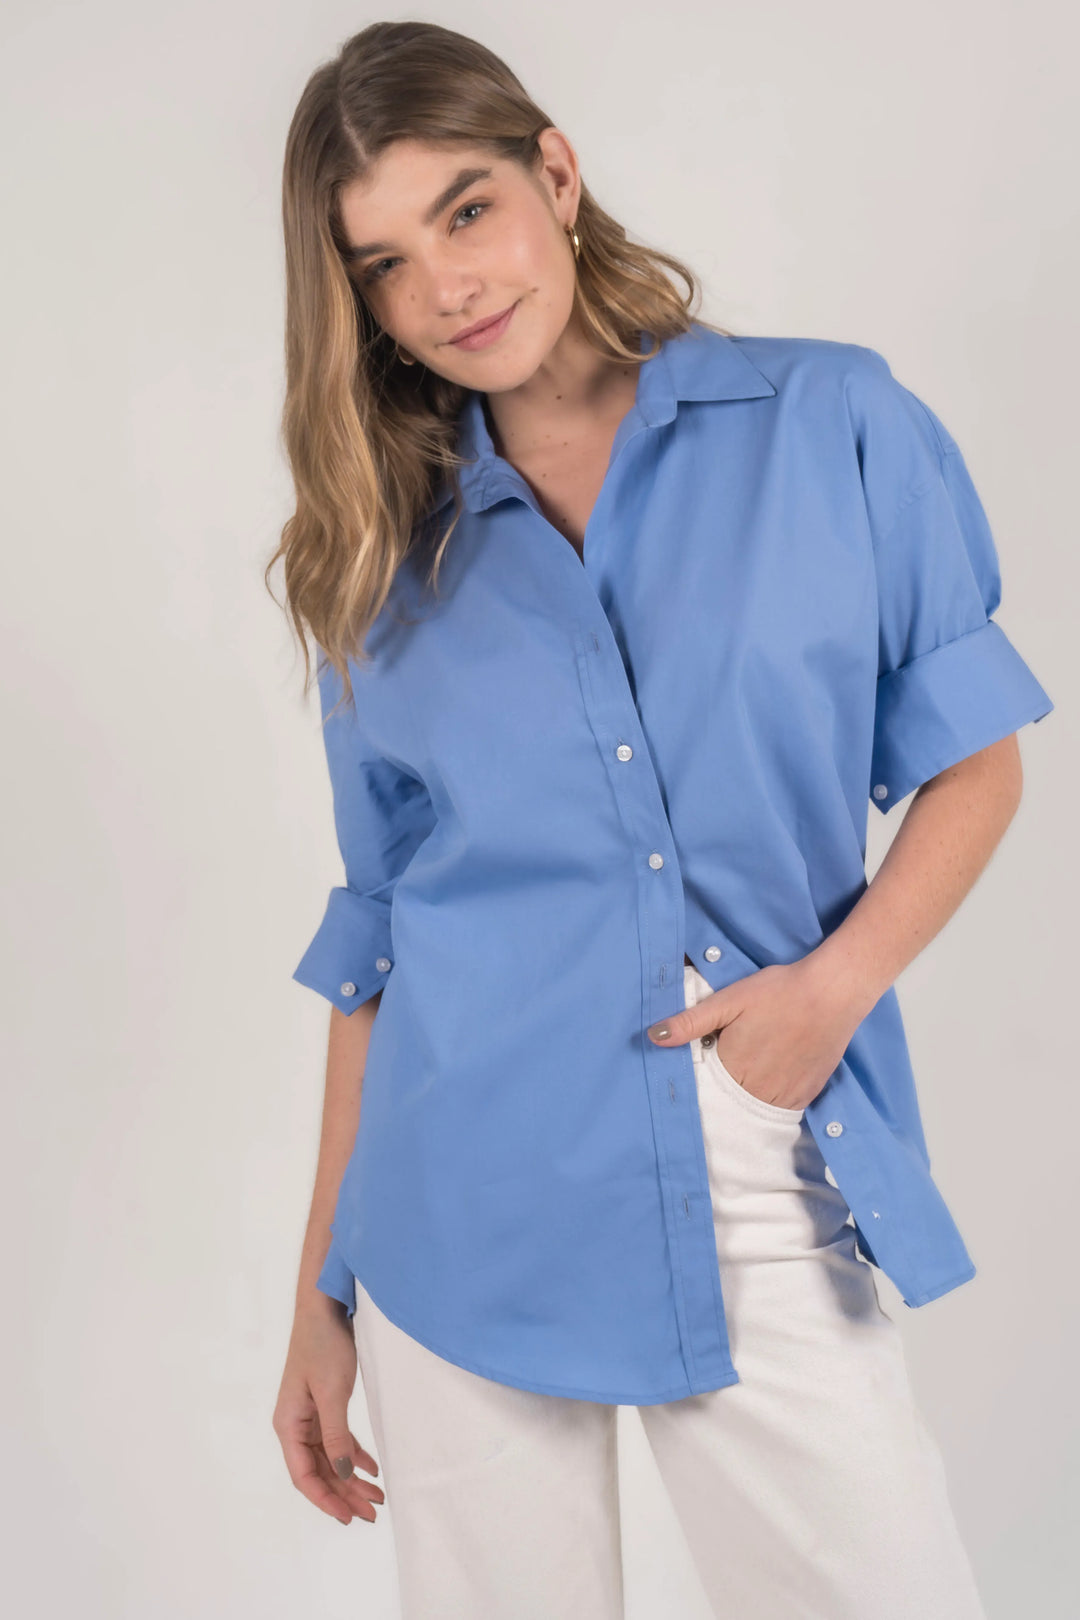 Camisa oversized para mujer, algodón popelina, color azul medio.